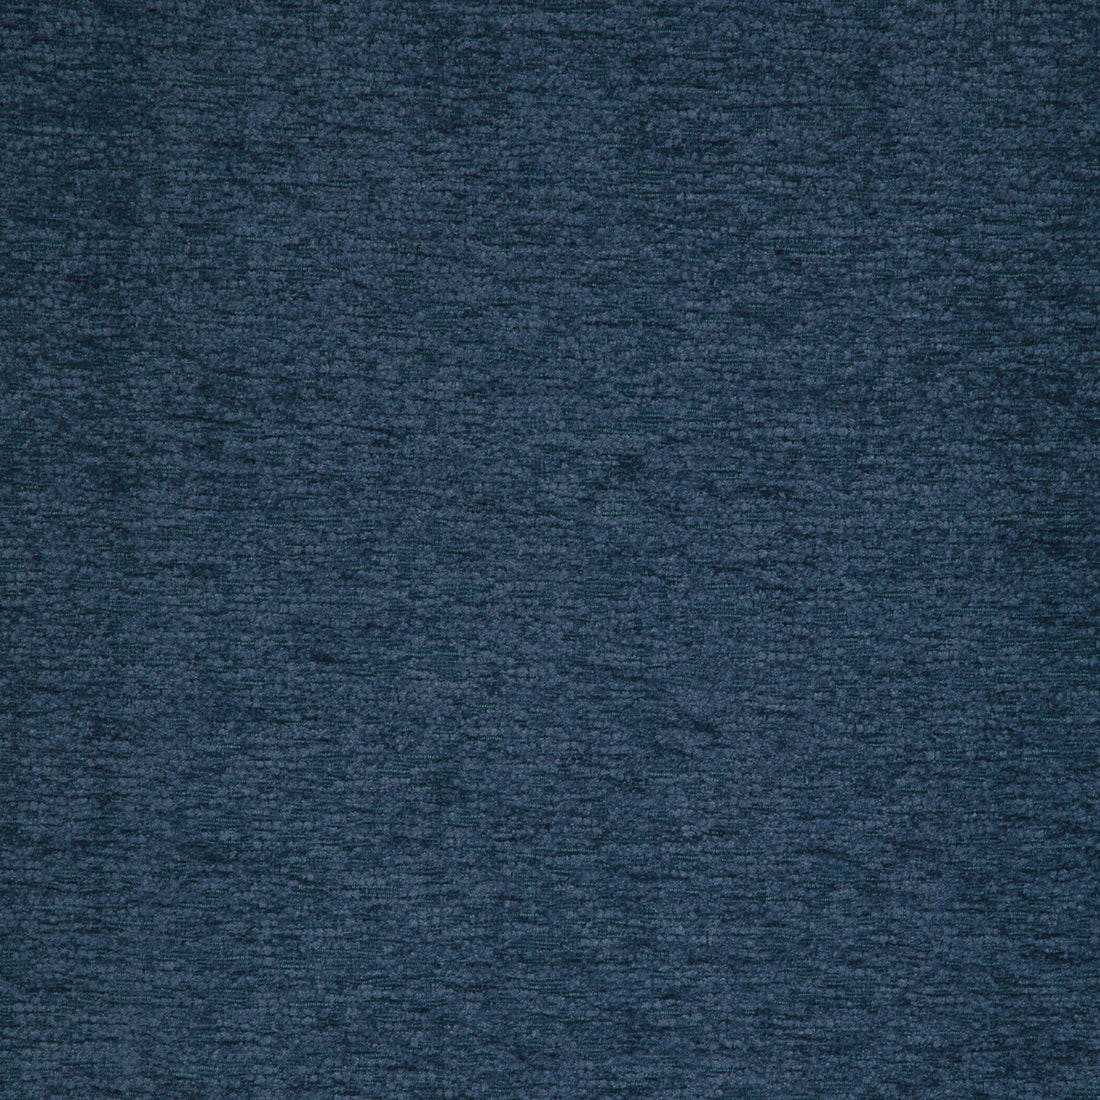 Kravet Smart fabric in 37002-5 color - pattern 37002.5.0 - by Kravet Smart in the Pavilion collection